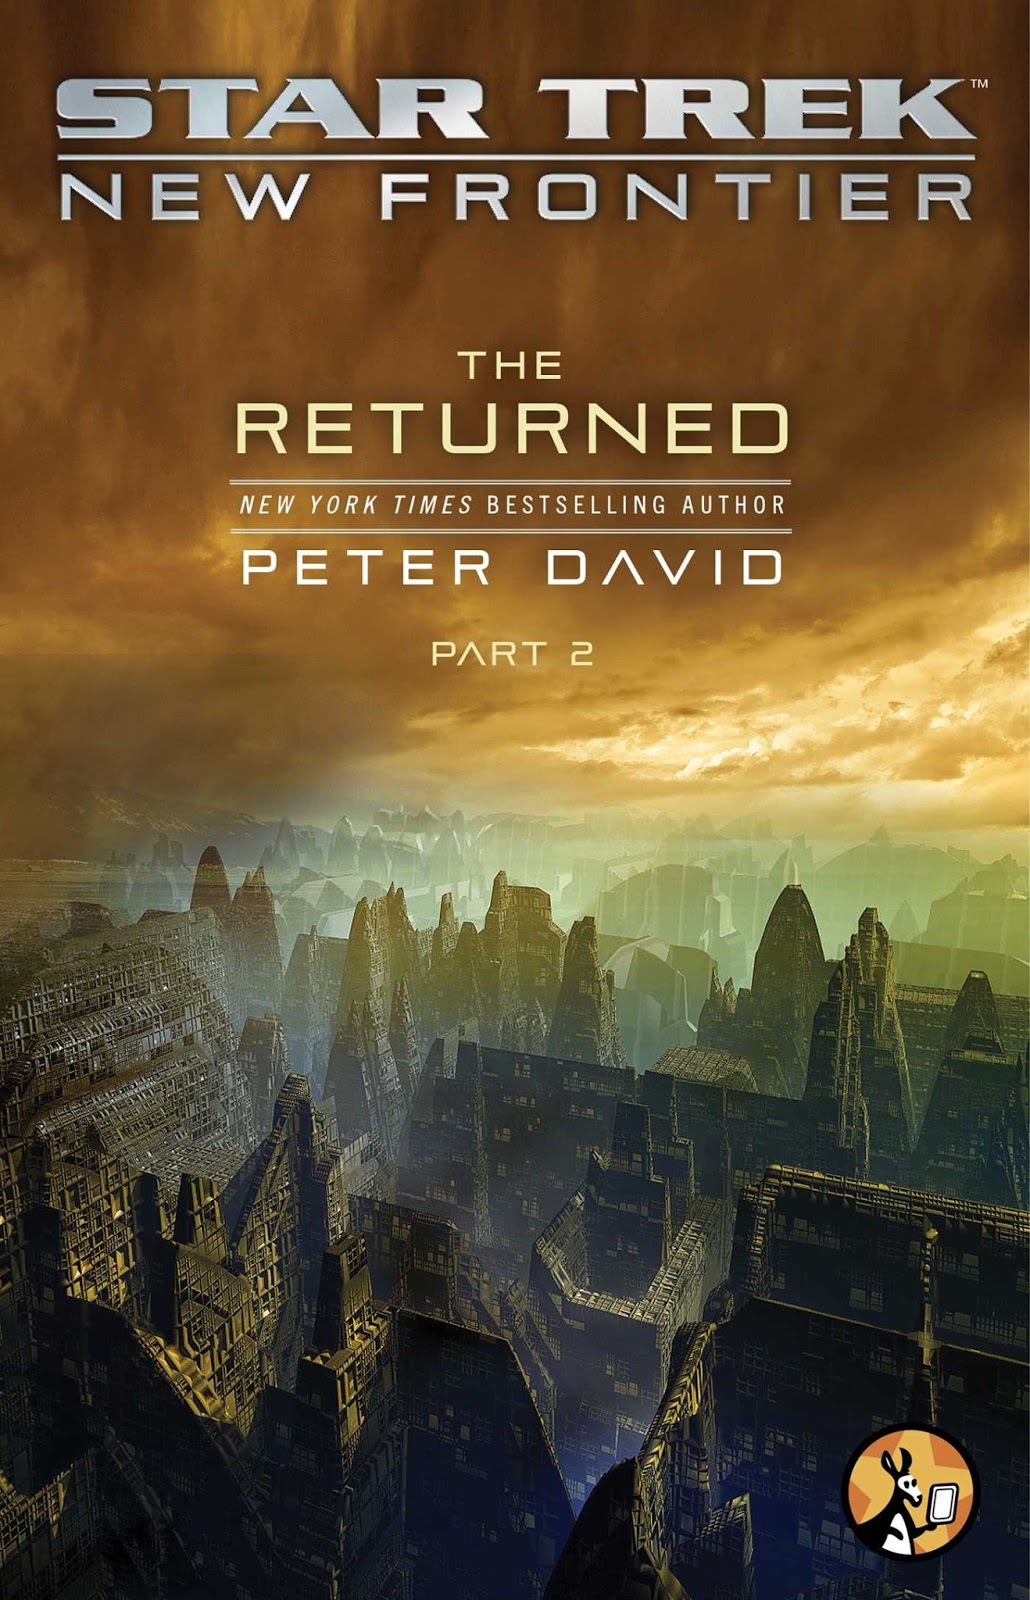 “Star Trek: New Frontier: The Returned Part 2” Review by Jimsscifi.blogspot.com